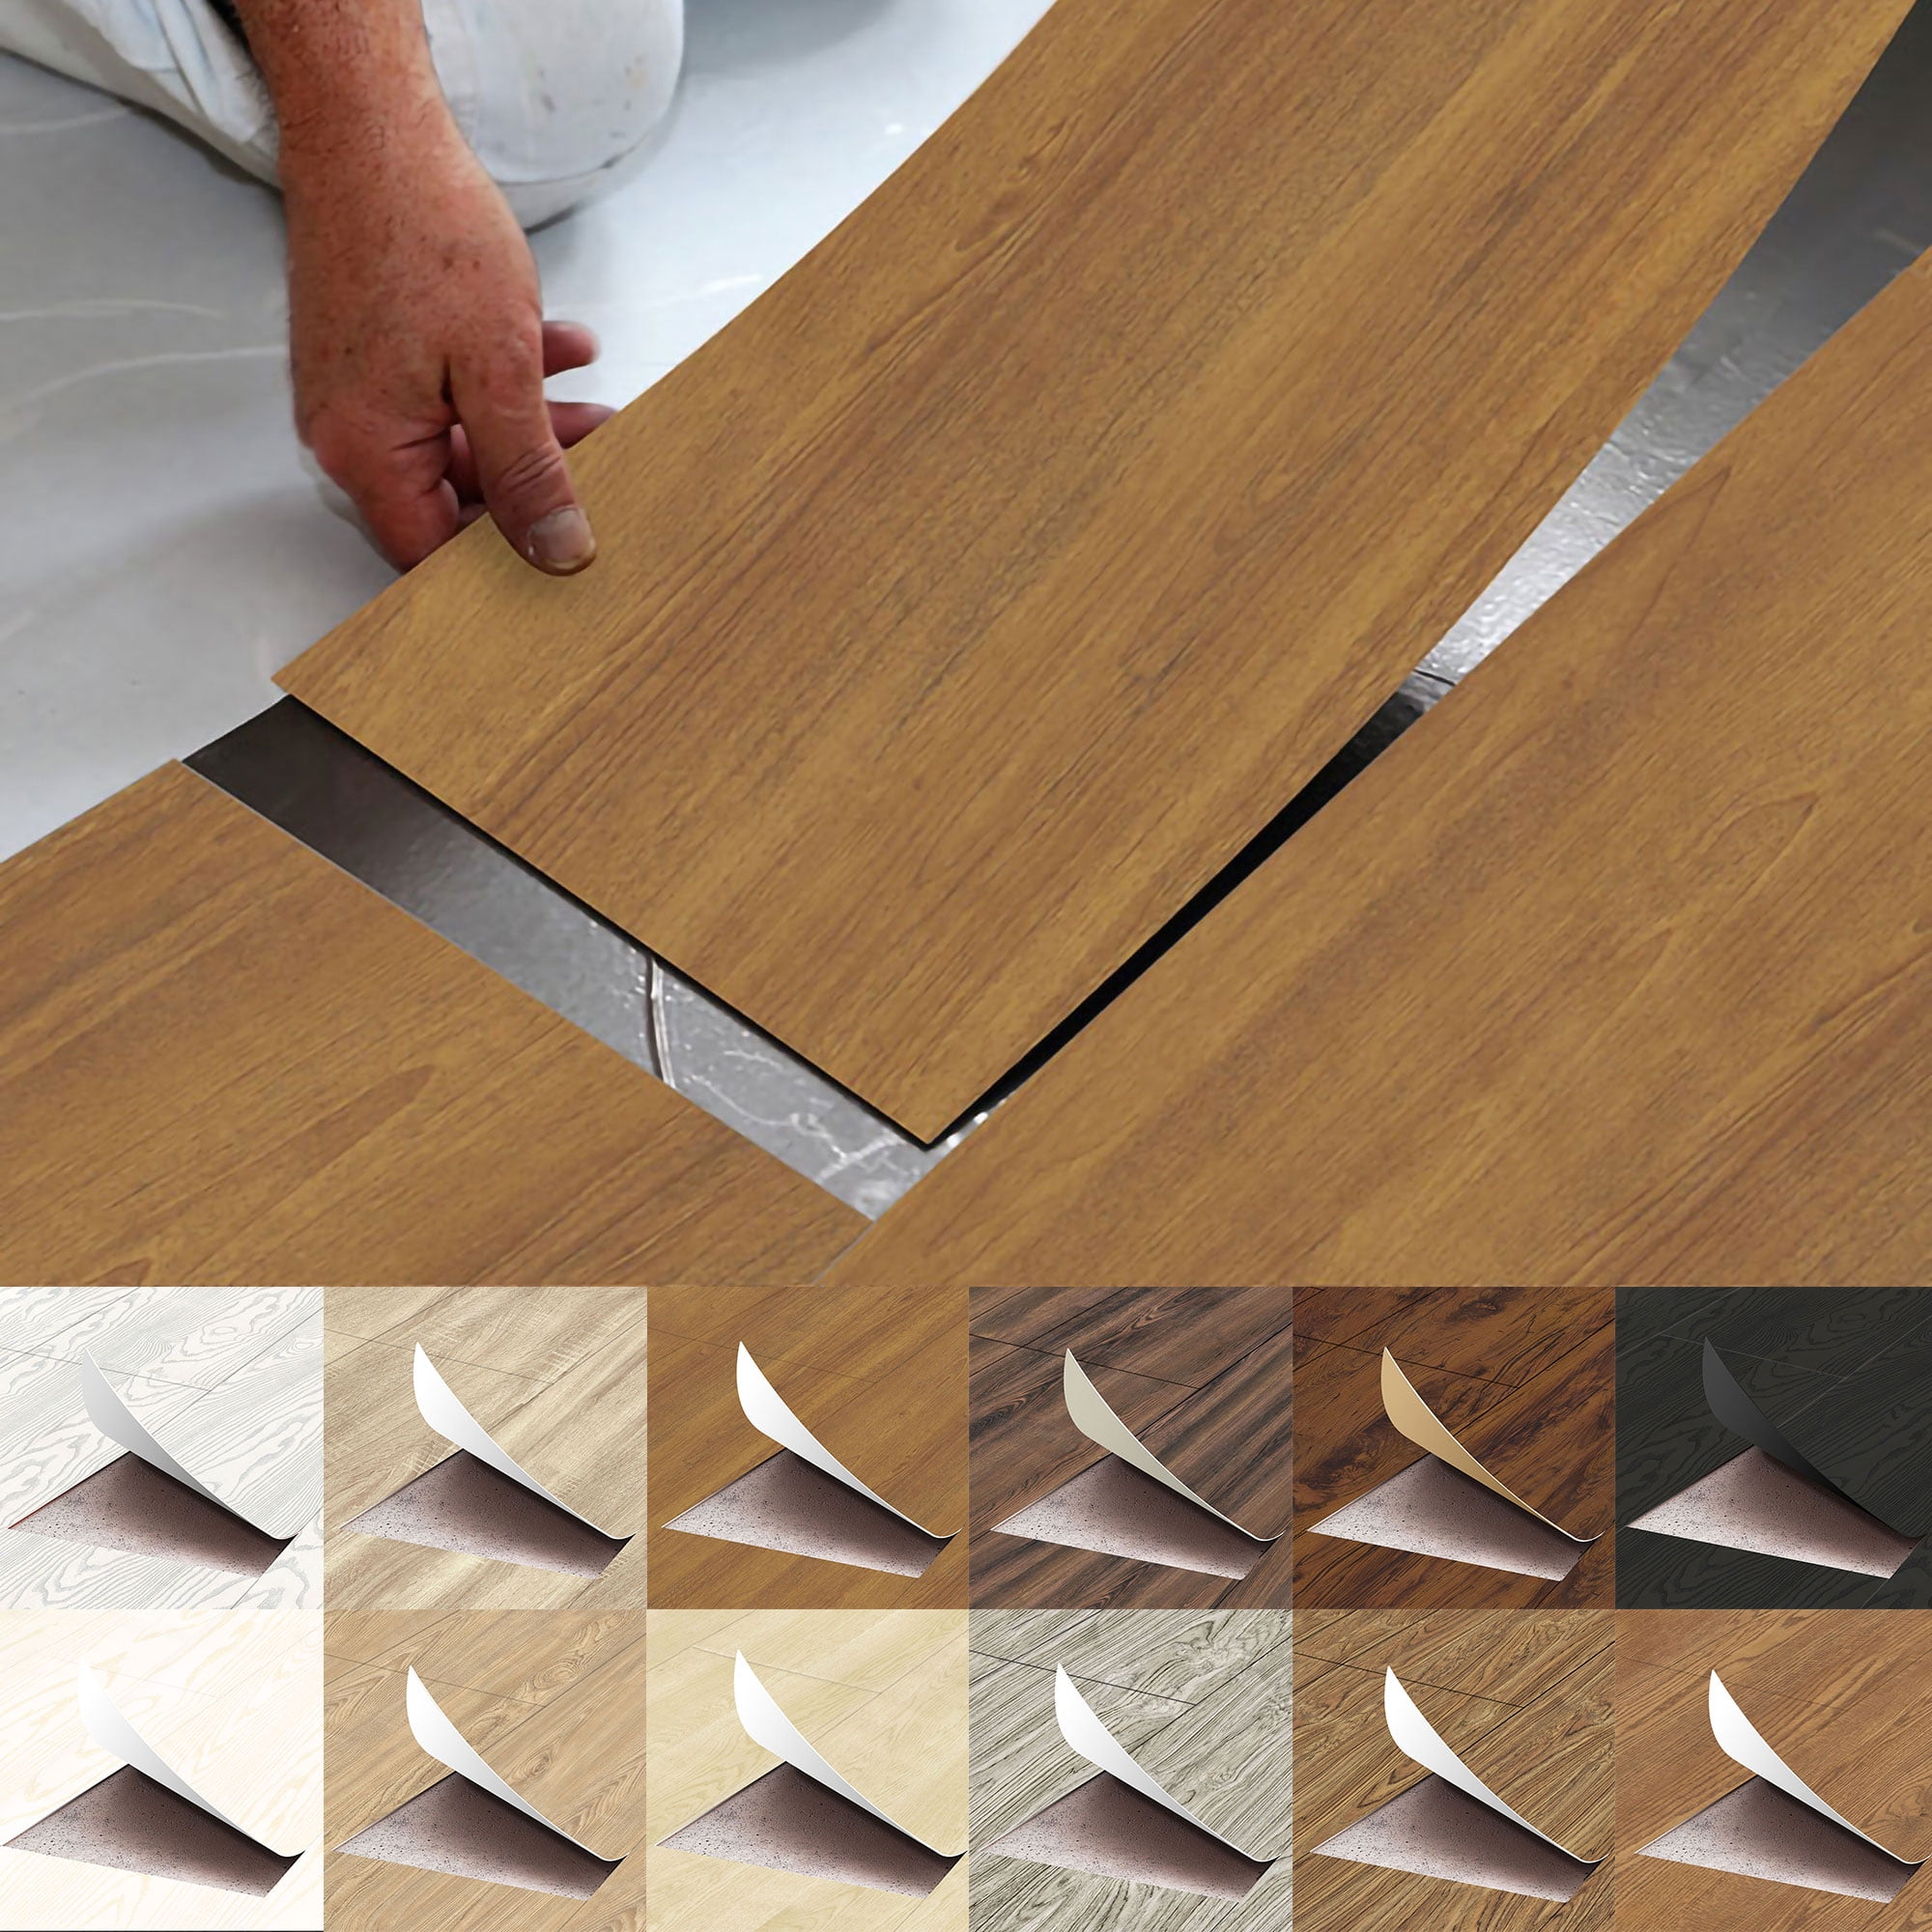 Cuh Wooden Wall Floor Planks Floor Tiles- Simple Peel And Stick Application For Kitchen Bathroom Living Room - Walmartcom